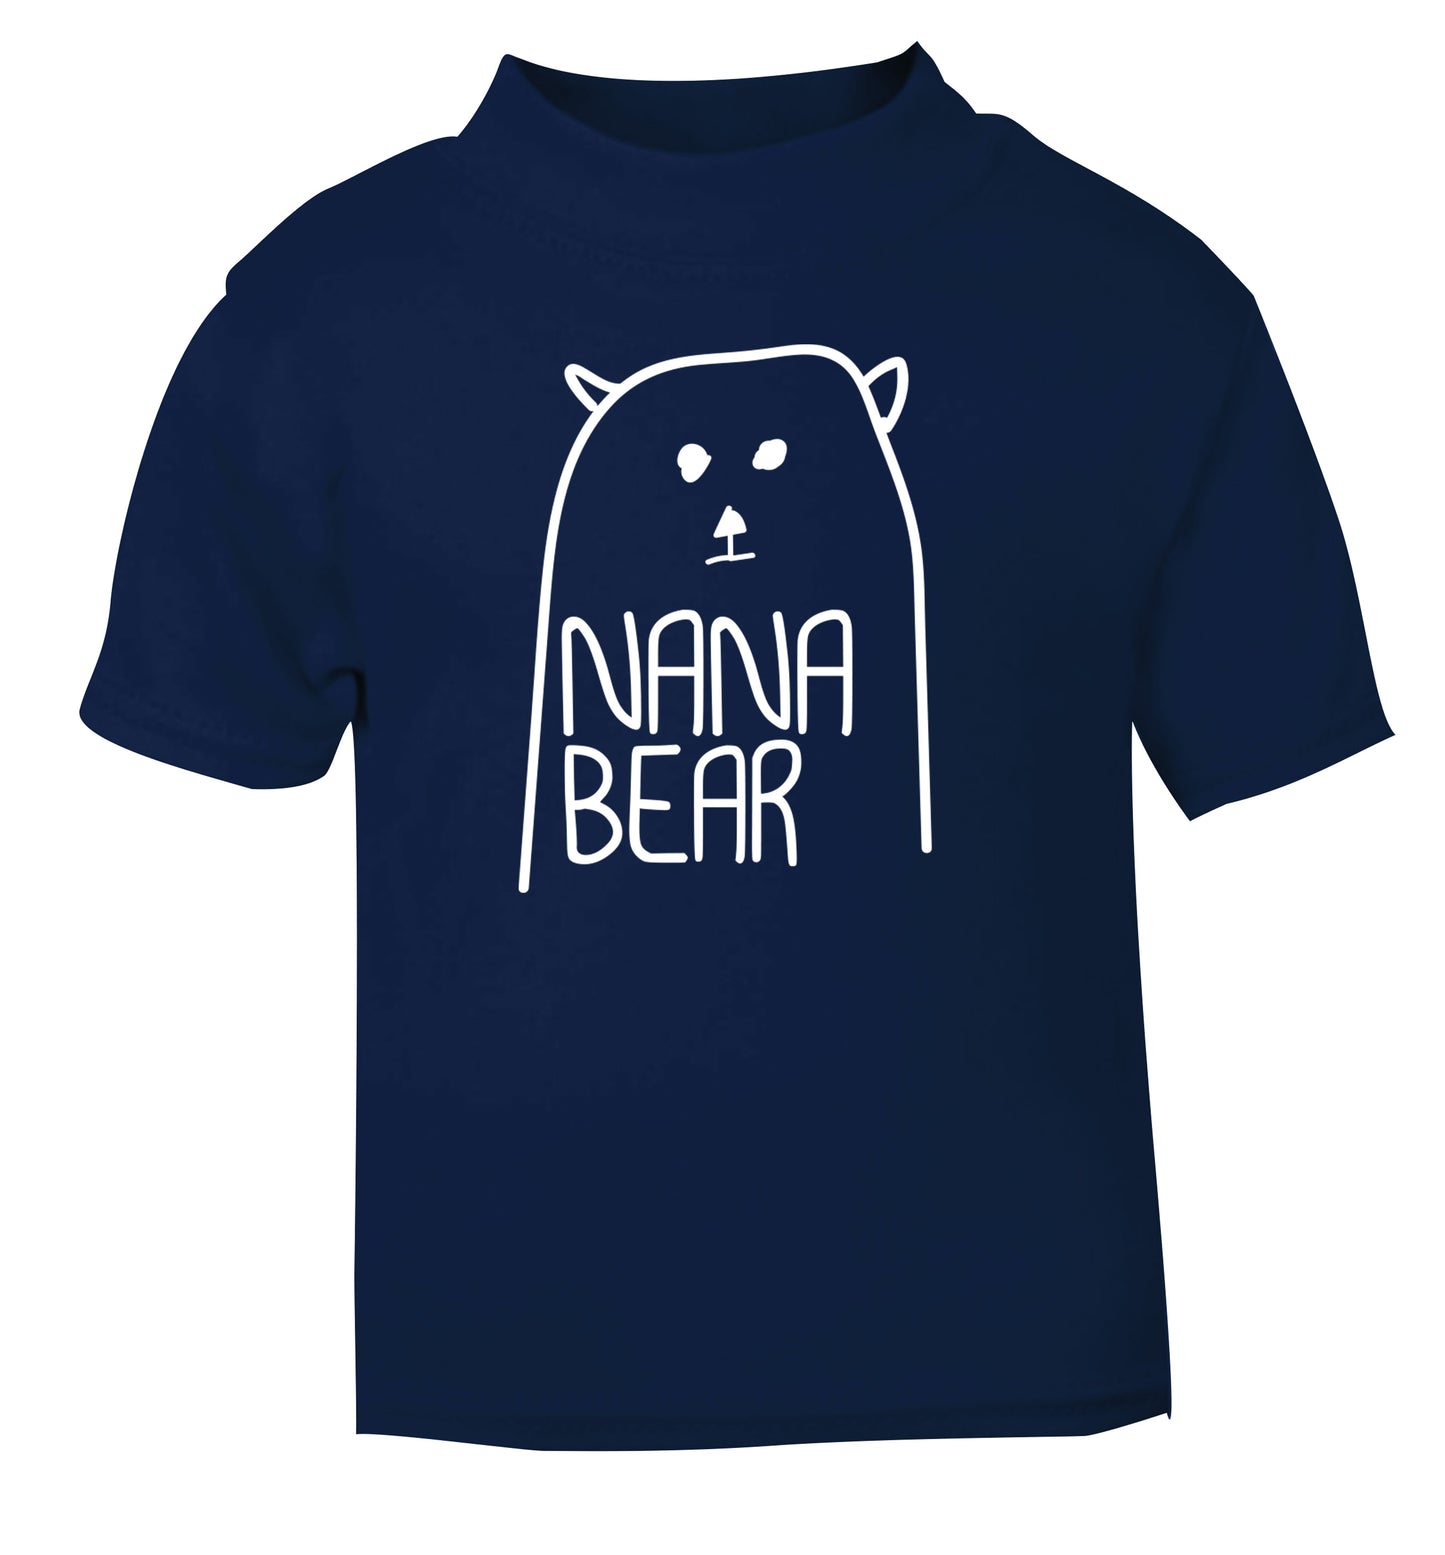 Nana bear navy Baby Toddler Tshirt 2 Years